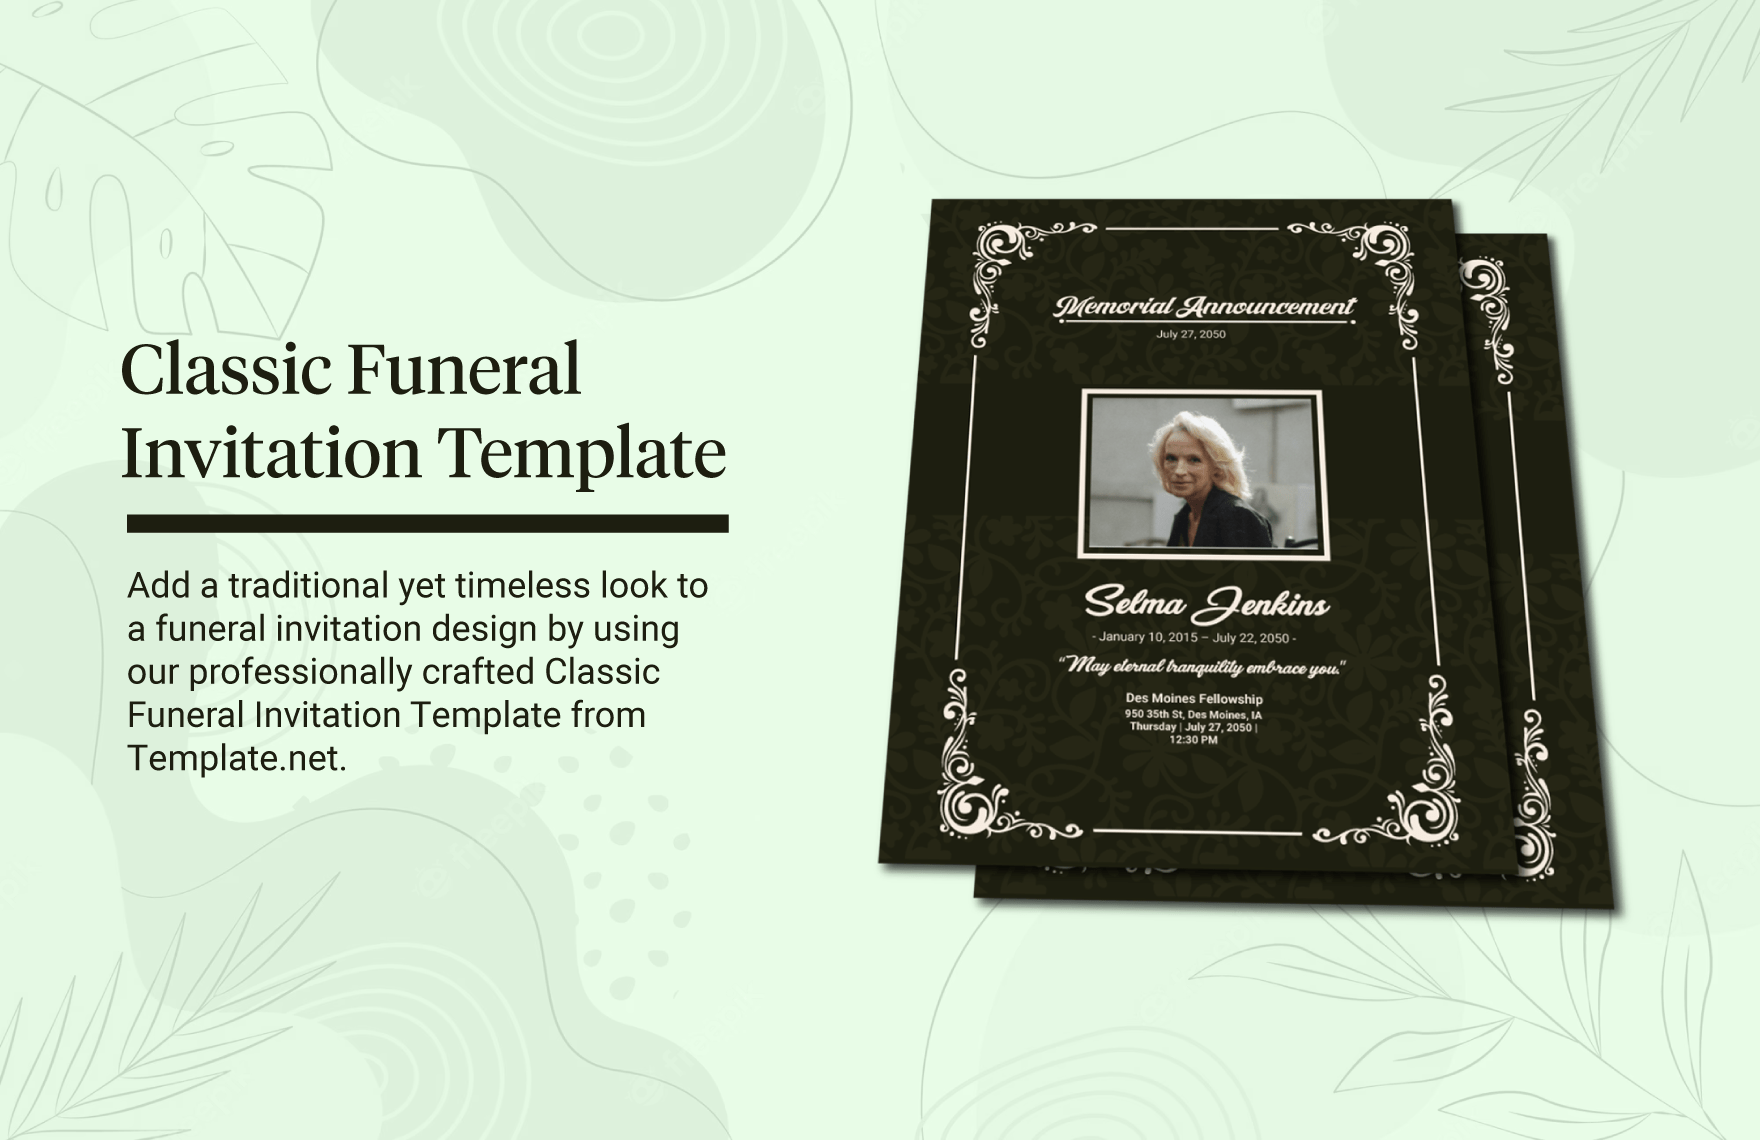 Classic Funeral Invitation Template in Word, Illustrator, PSD